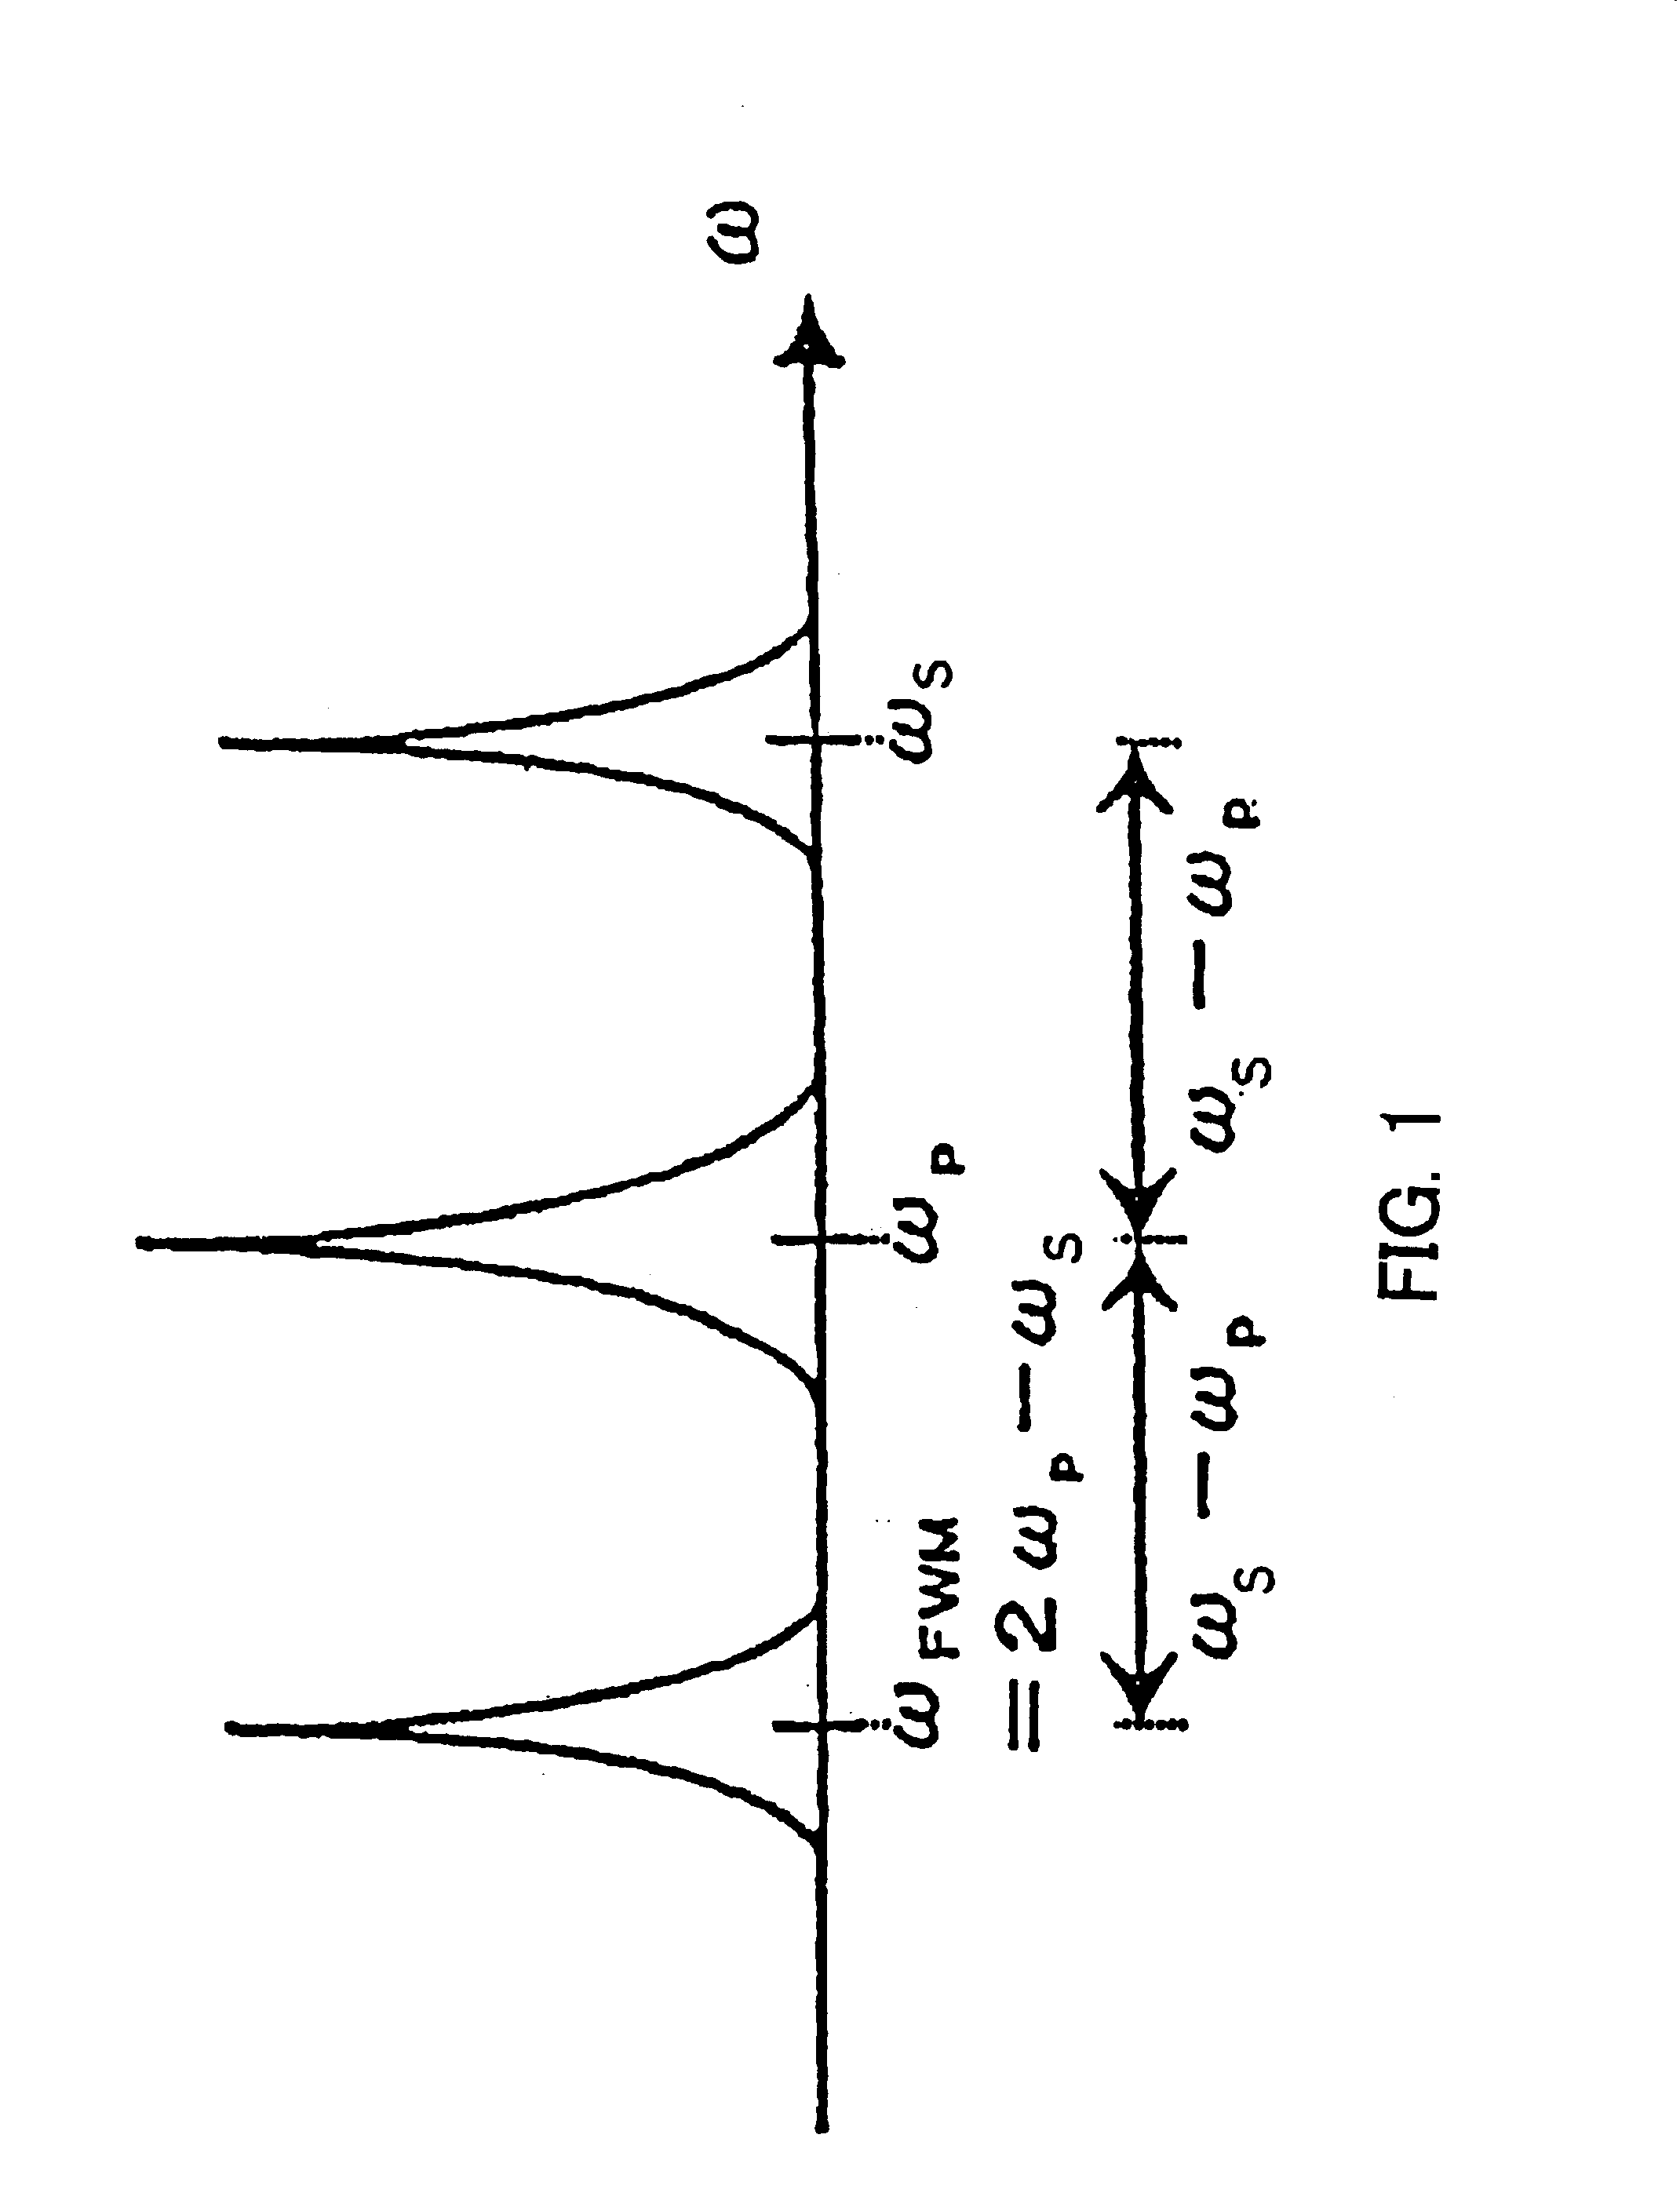 Wavelength conversion apparatus